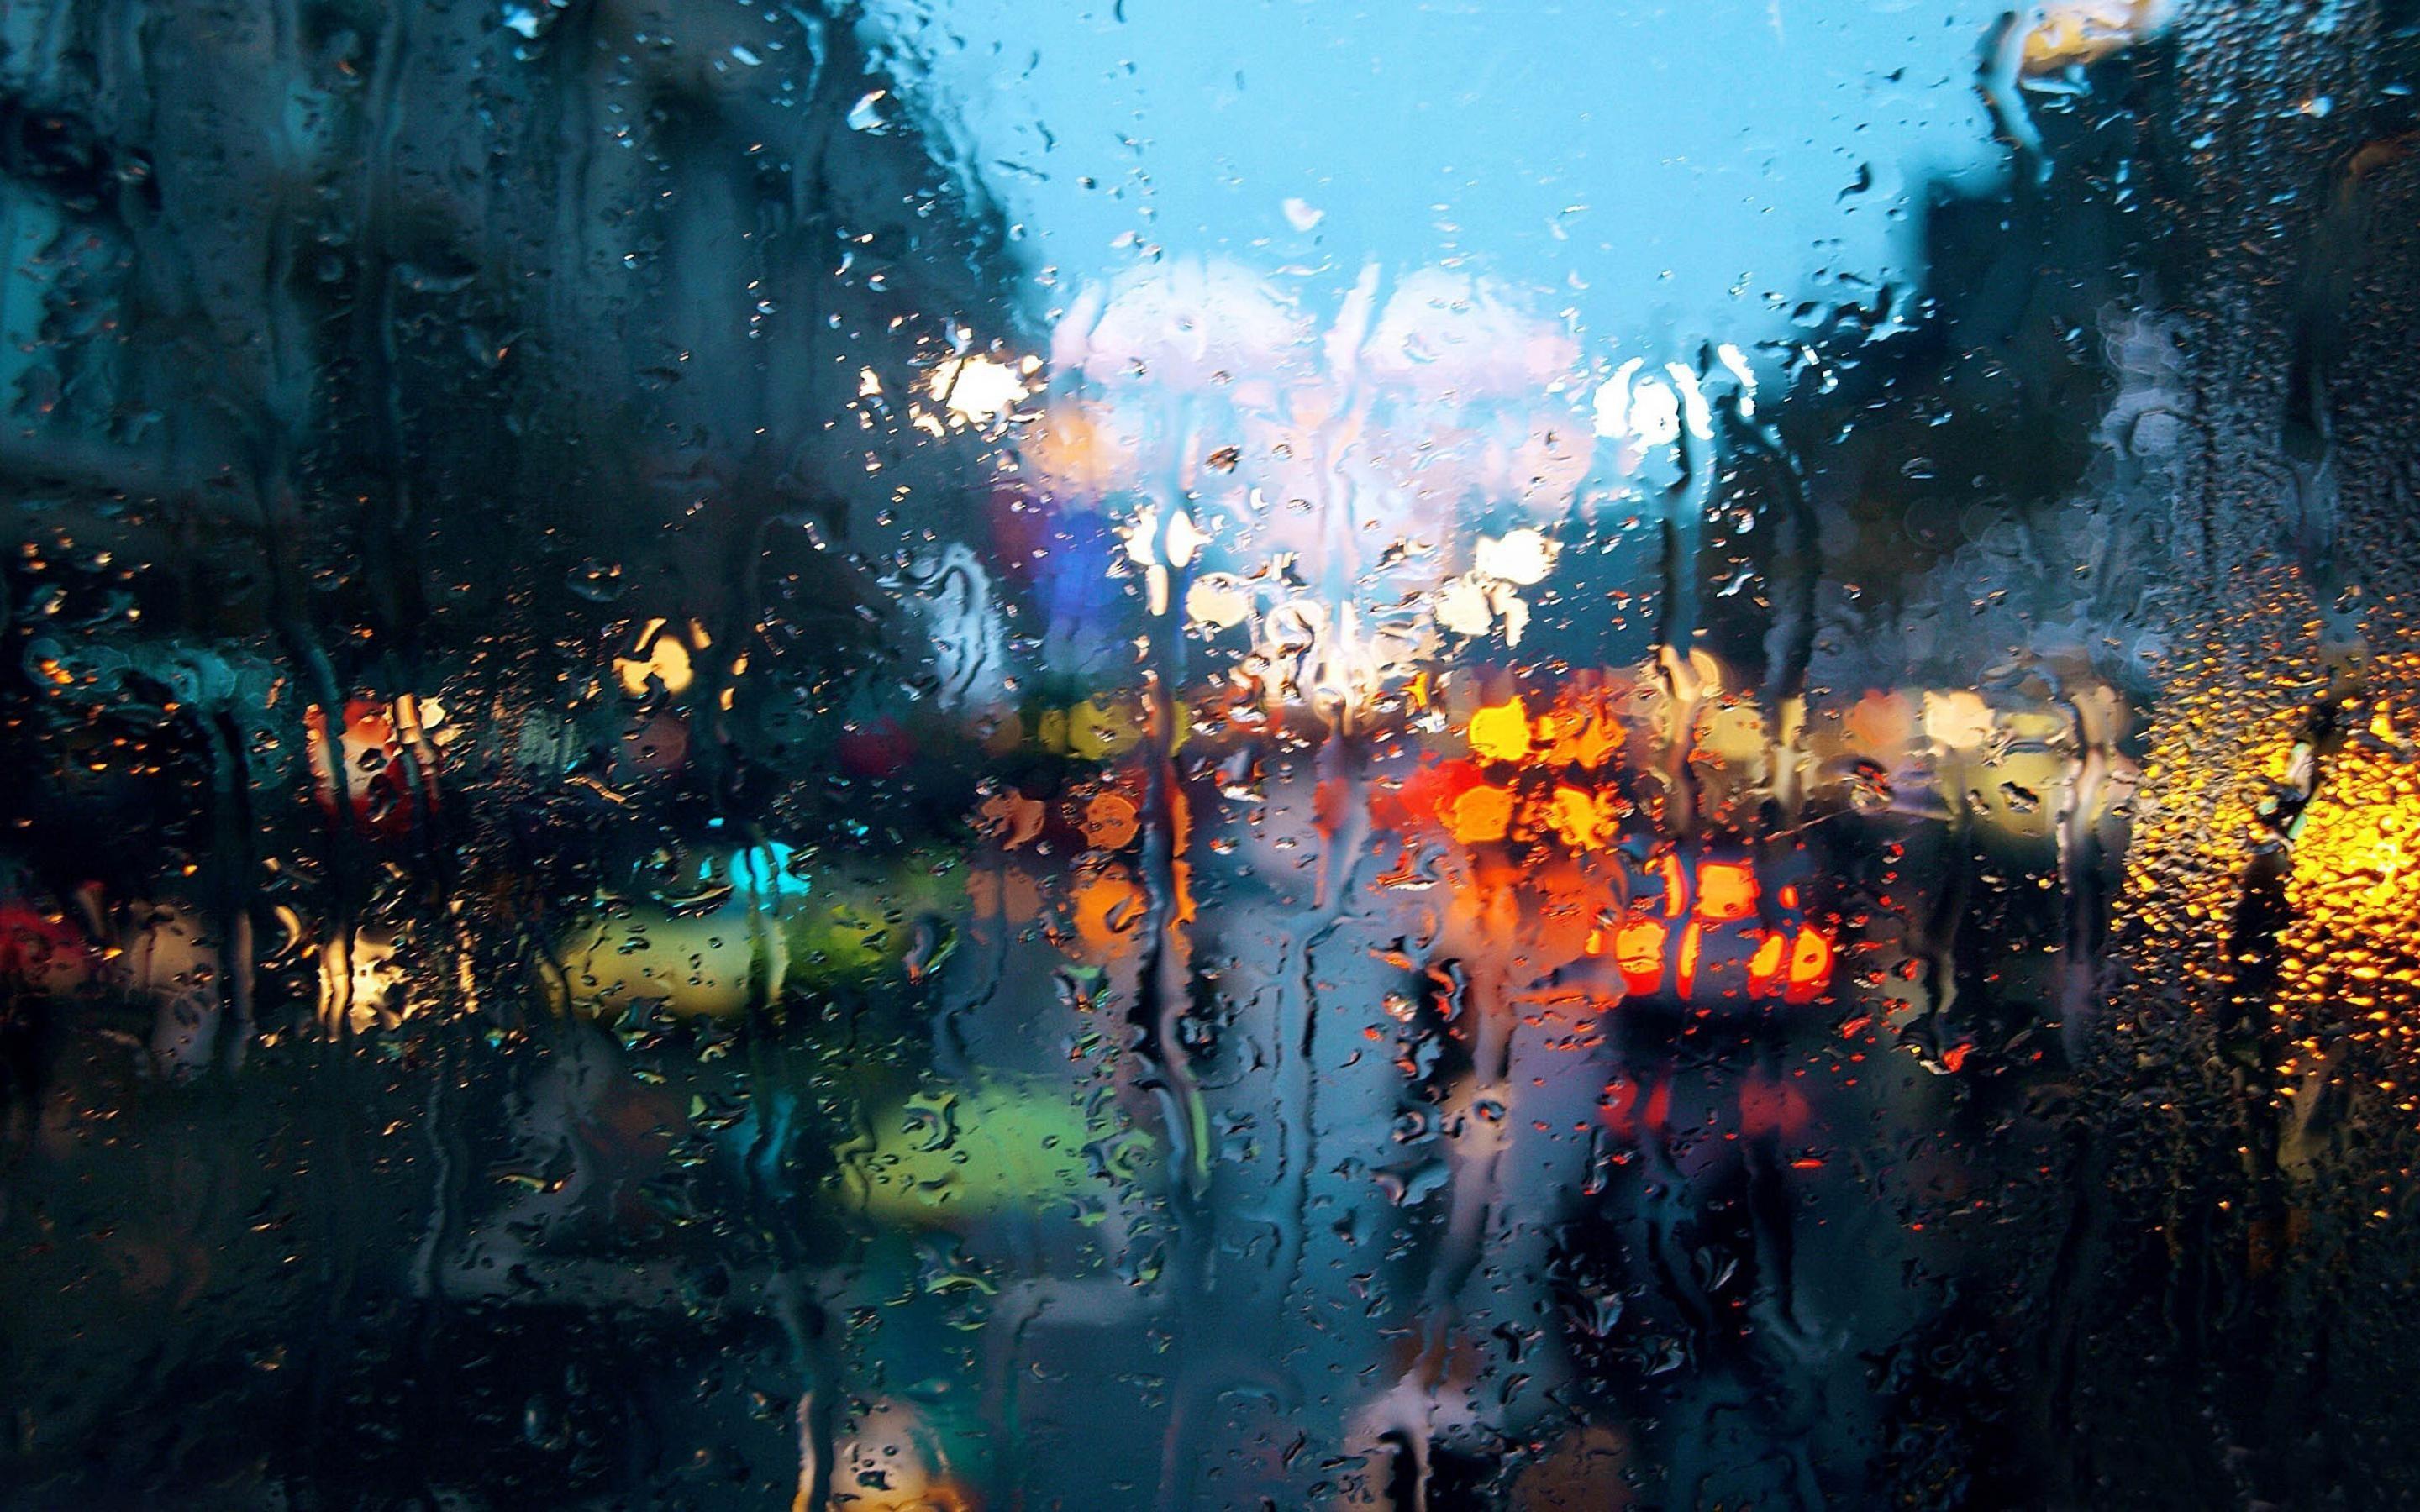 550 Rain City Pictures  Download Free Images on Unsplash